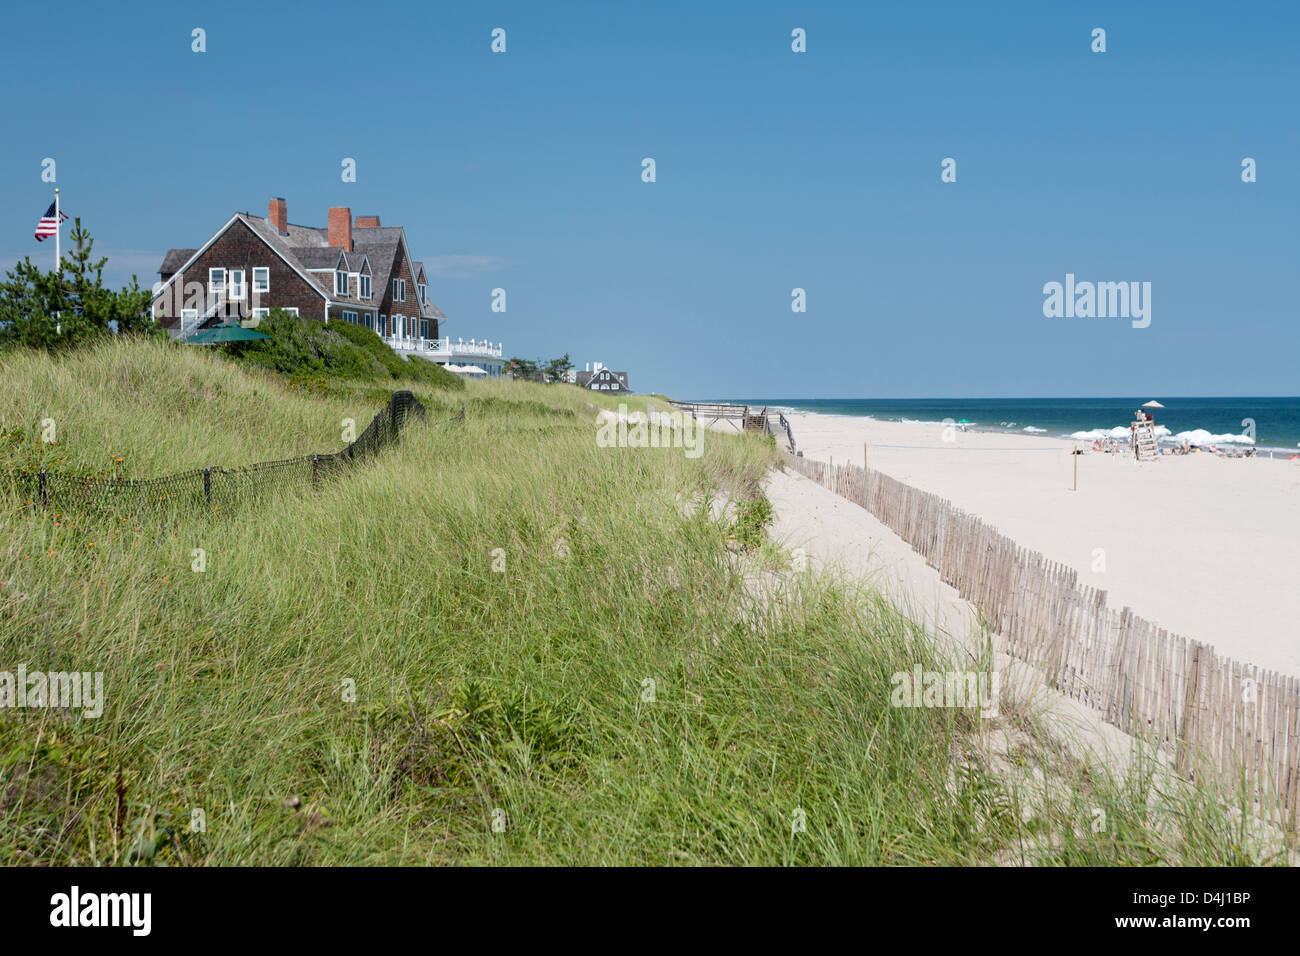 BEACH HOUSE ON DUNES ATLANTIC BEACH AMAGANSETT SUFFOLK COUNTY LONG ISLAND NEW YORK STATE USA Stock Photo